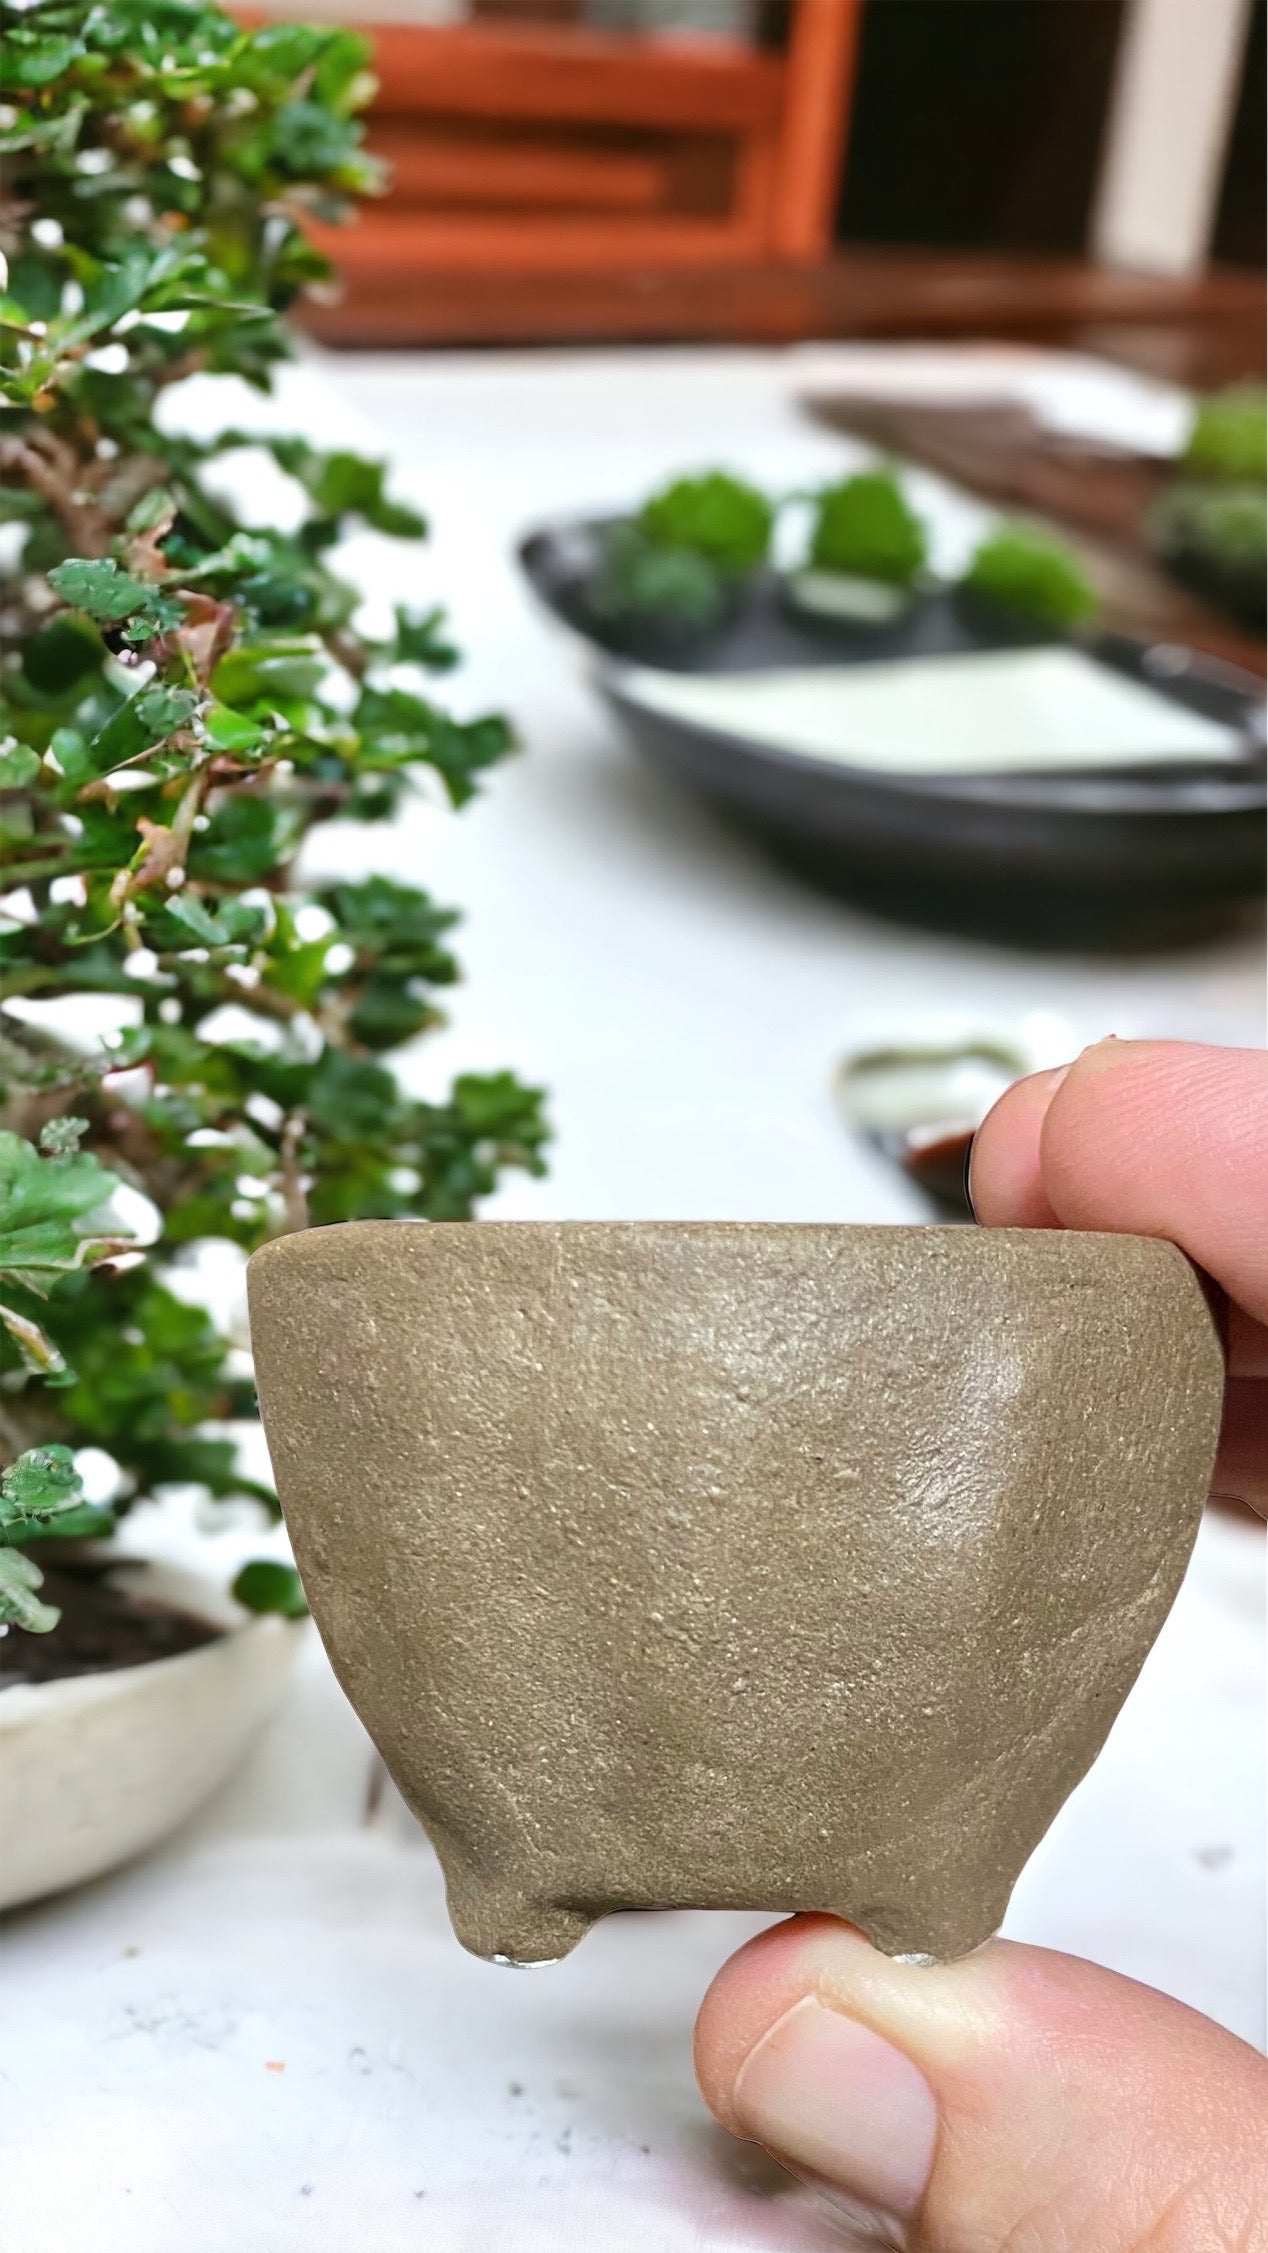 Syouzan - Handmade Mame Bowl Bonsai or Accent Pot